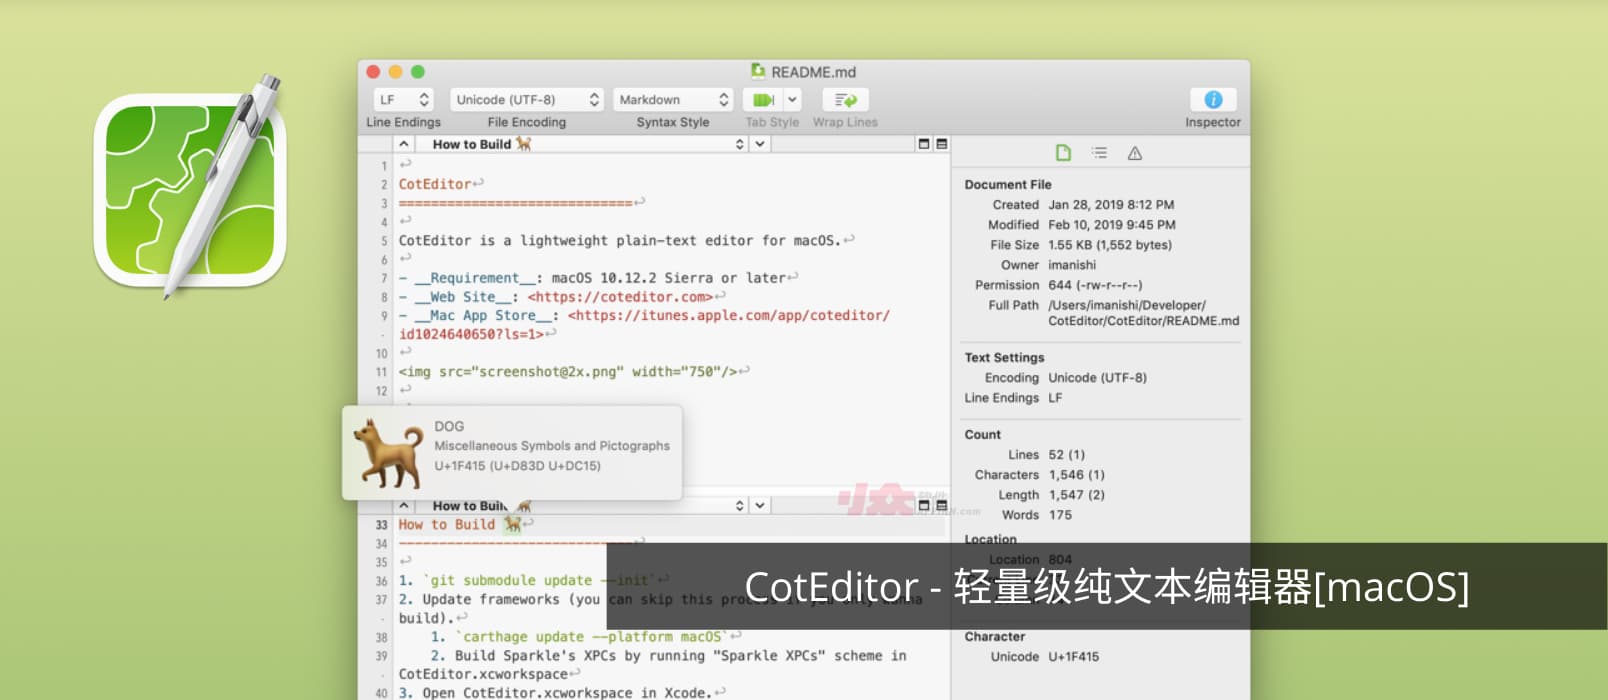 CotEditor - 轻量级纯文本编辑器[macOS]